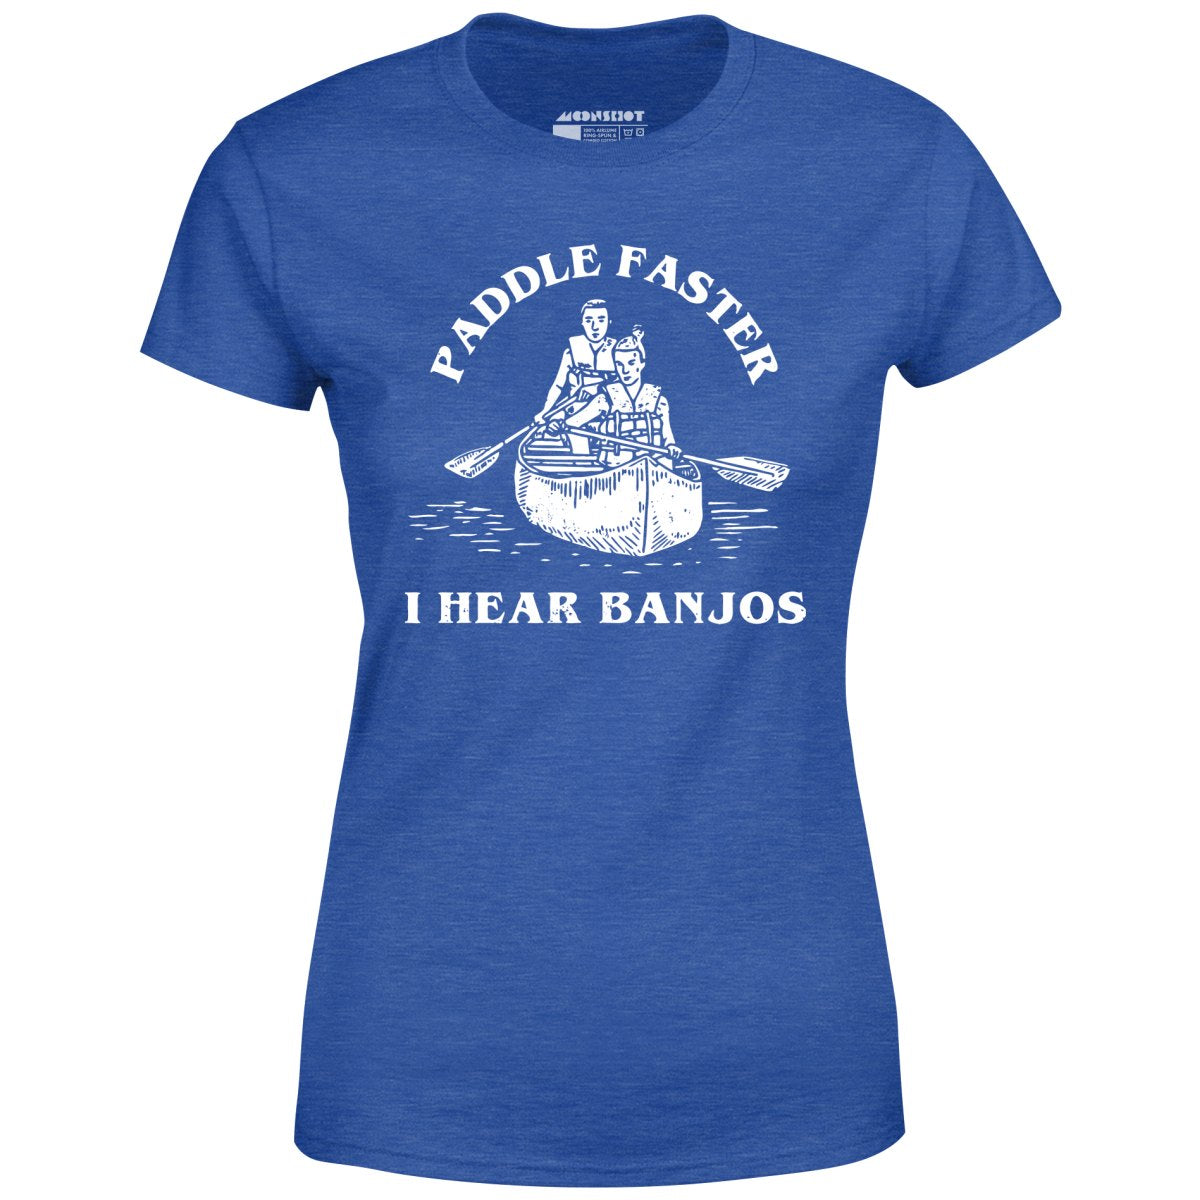 Paddle Faster I Hear Banjos - Women's T-Shirt